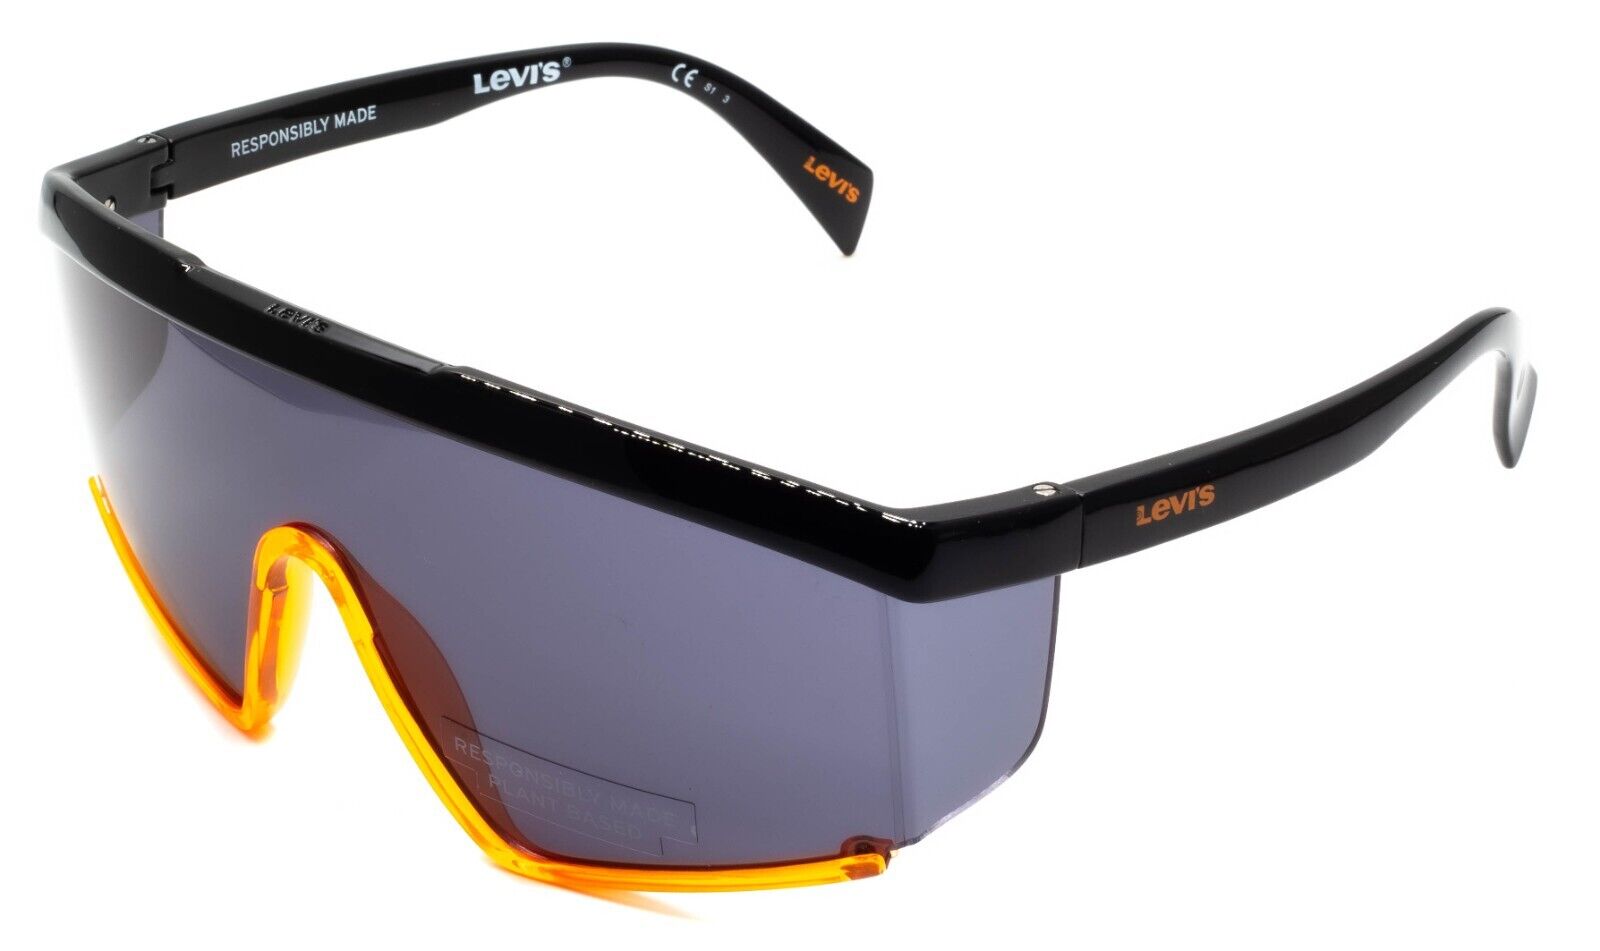 QUIKSILVER DEVILLE EQYEY03043 XSSS 54mm Sunglasses Shades Glasses